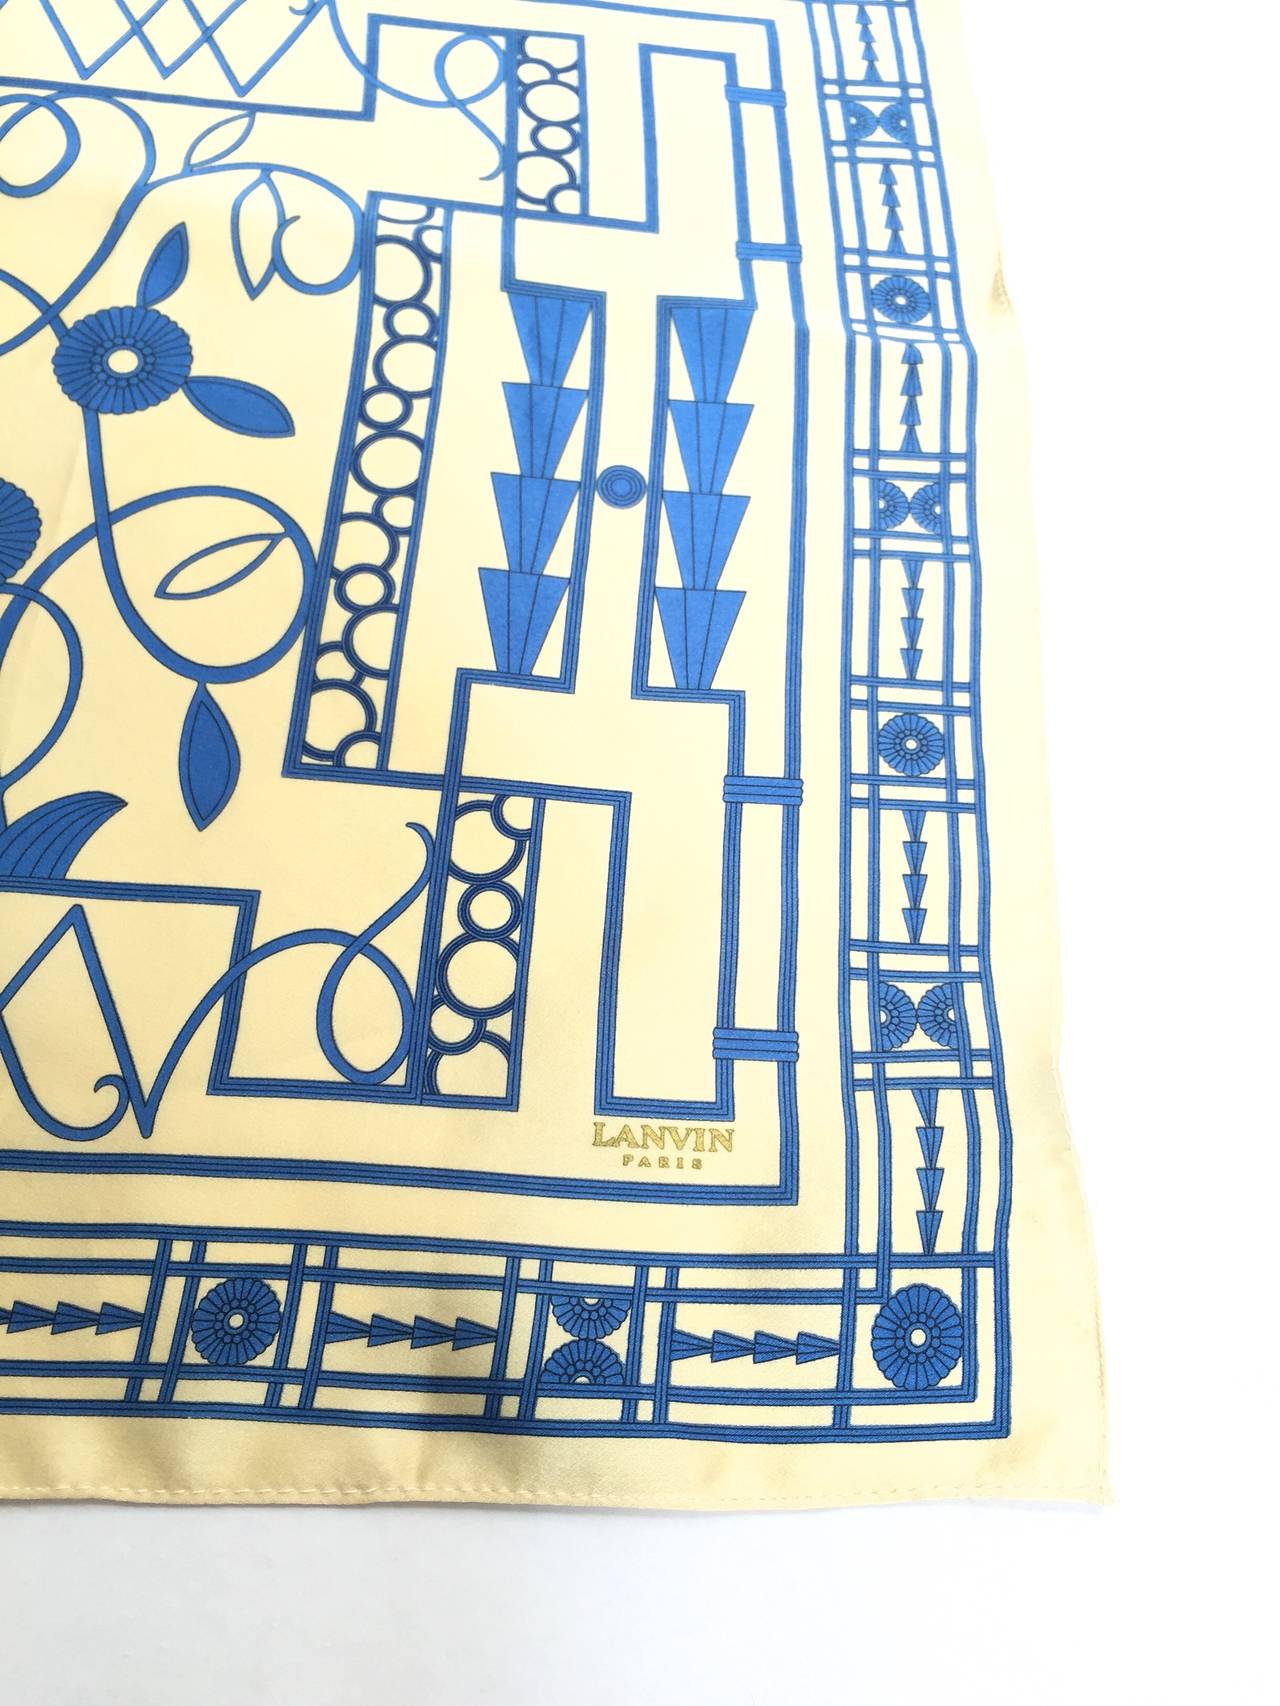 Lanvin 1980s silk Art Deco pattern pocket square / scarf / handkerchief.
Measurements are:
14.1/2